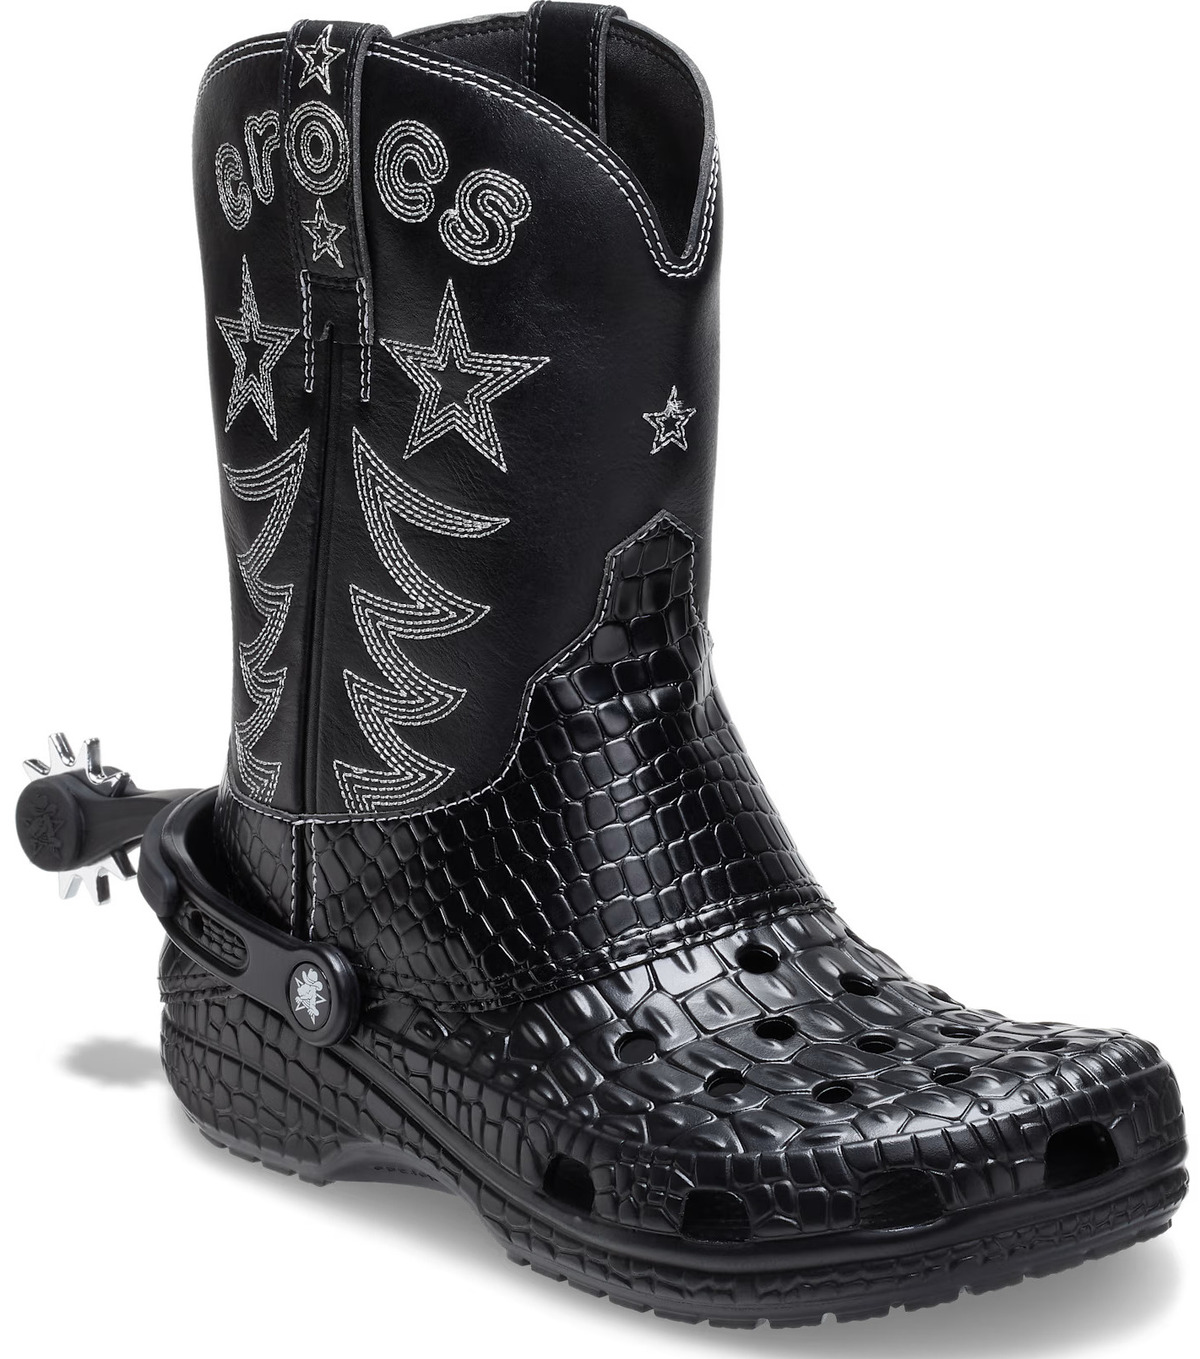 Classic cowboy boot by Crocs